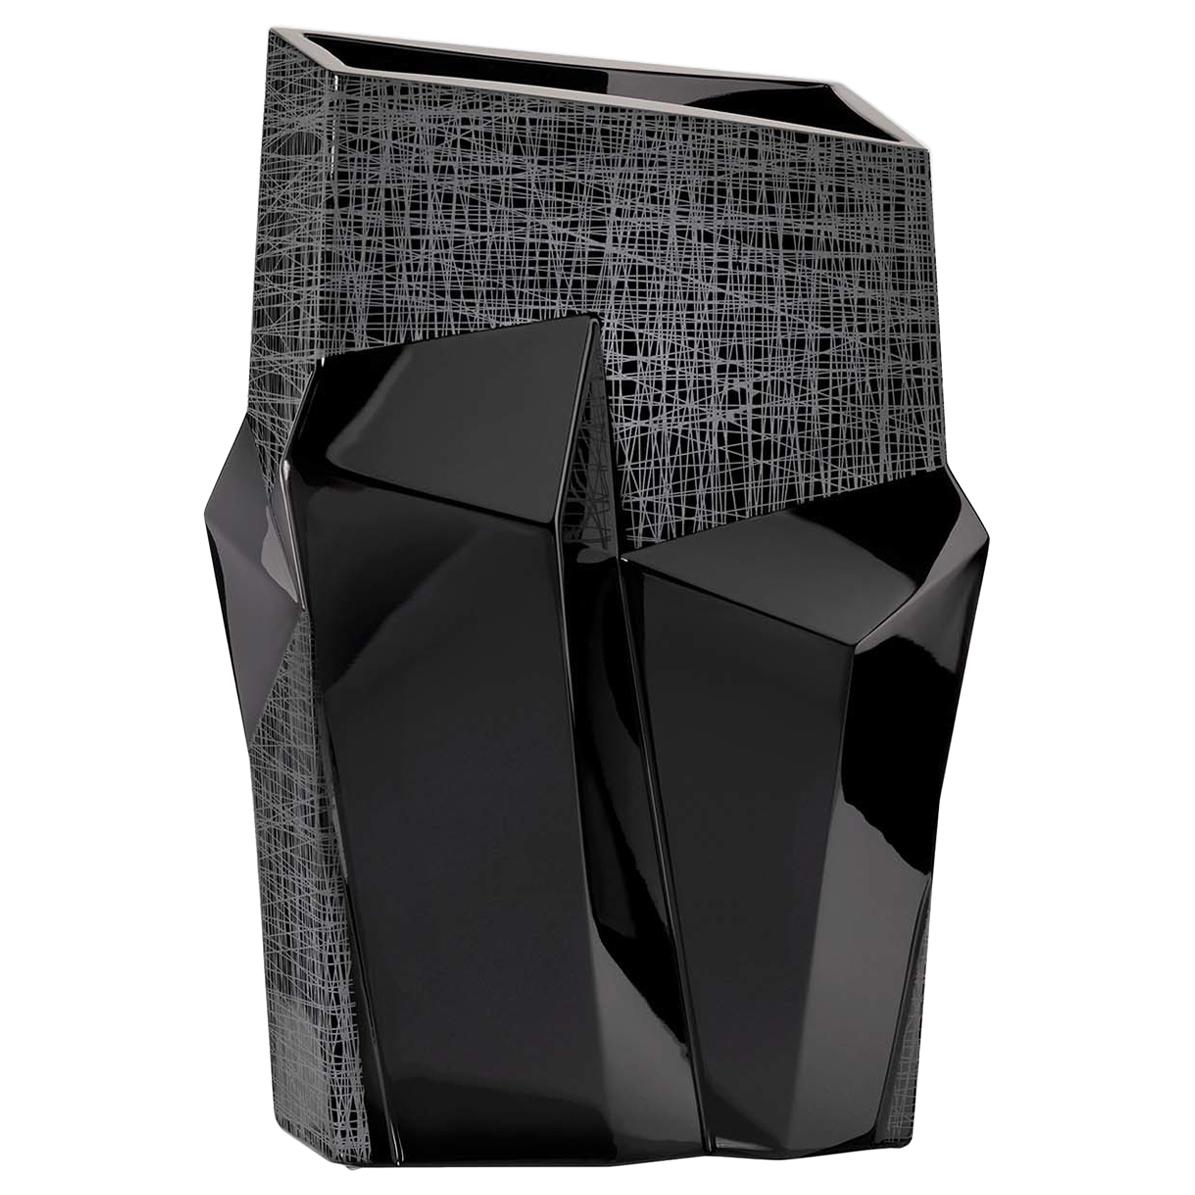 Tondo Doni Metropolis, schwarze Vase von Mario Cioni